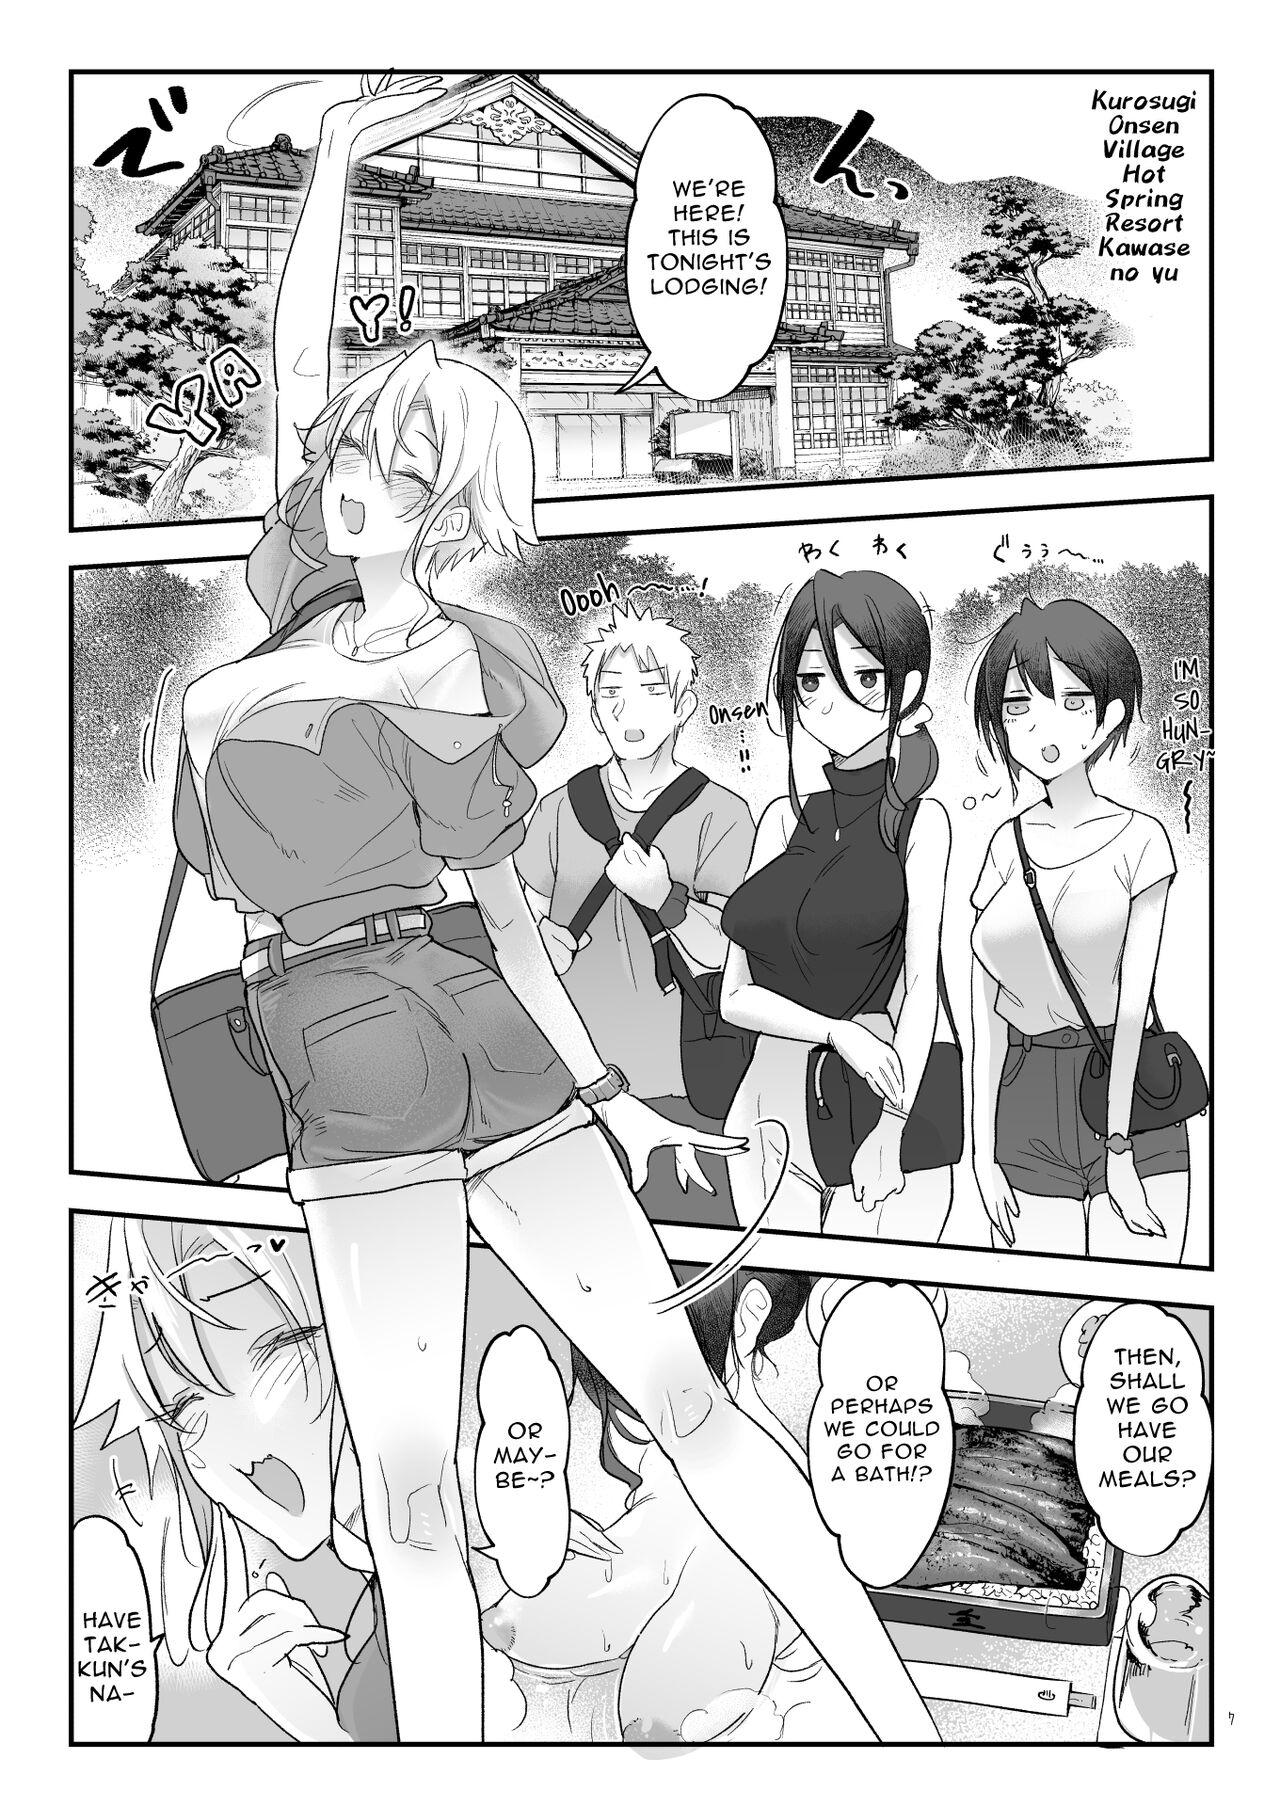 Tied Mesudachi Onsen Ana No Yu | Mesudachi Hot Springs Holes and Baths Lesbian - Page 6